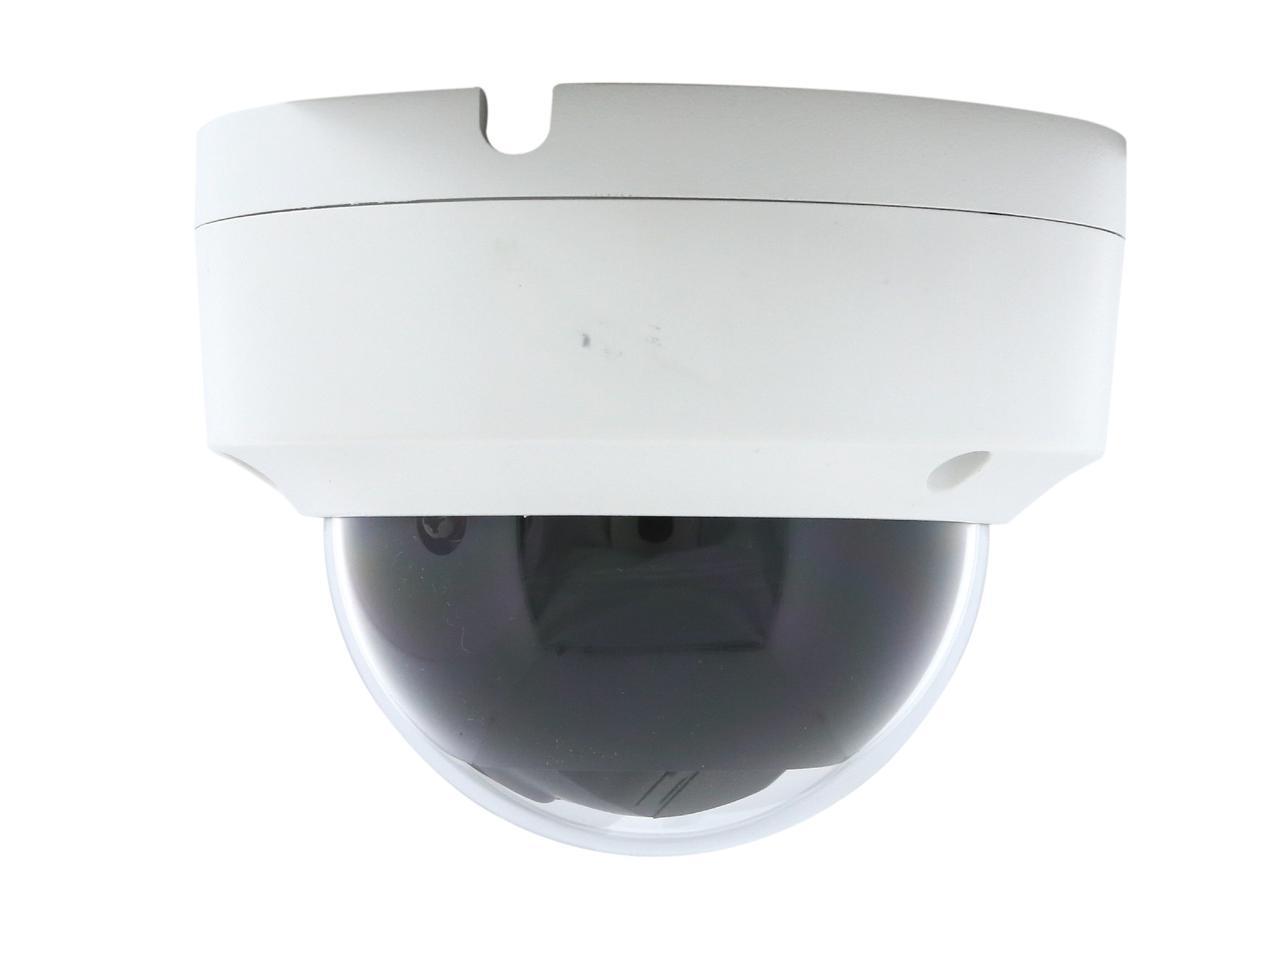 LaView LV-PD514028C Single 4MP IP Dome Camera - Newegg.com